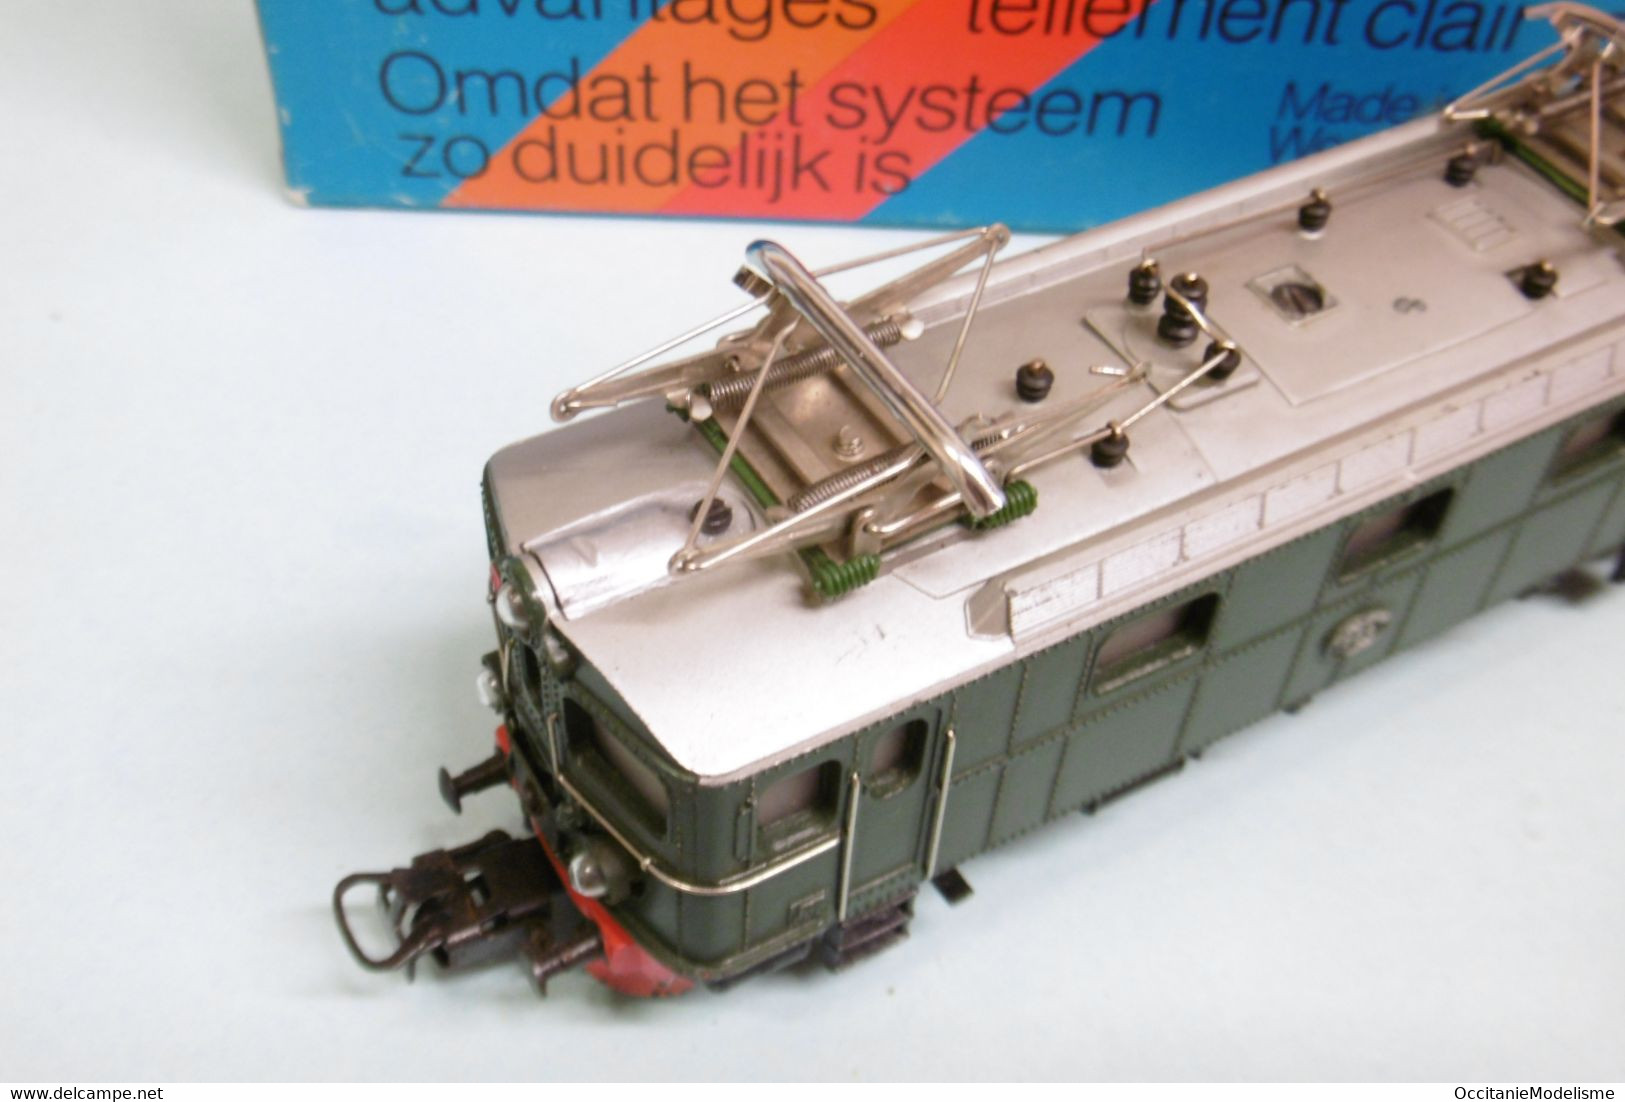 Märklin 3 rails - Locomotive ELECTRIQUE GS 884 800 SJ Nohab réf. 3019 HO 1/87